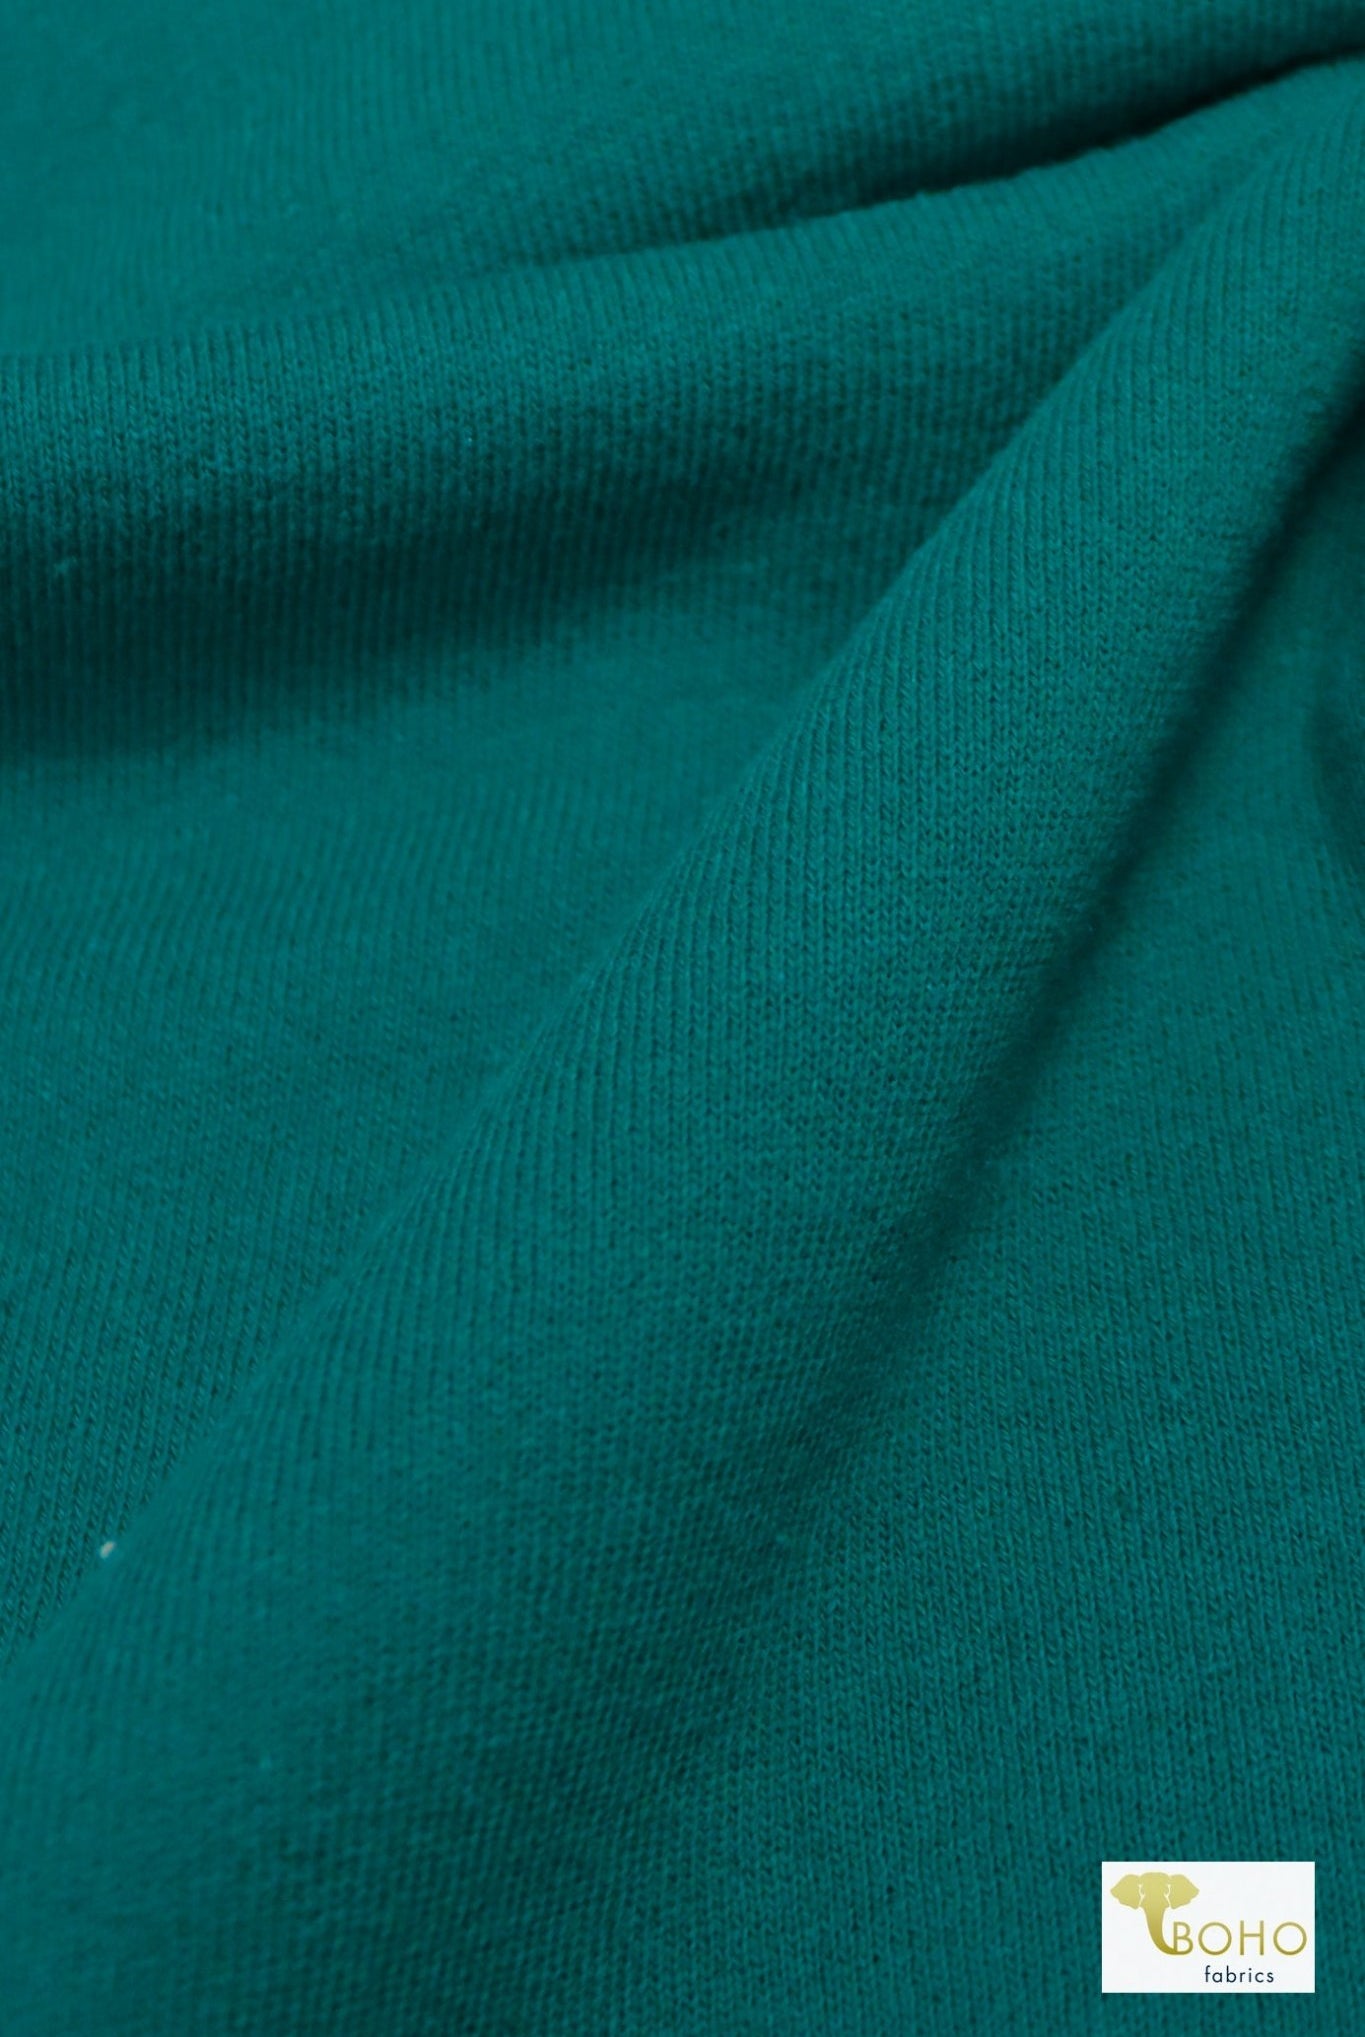 1x1 Rib Knit, Teal Cotton Rib. SOLD BY THE HALF YARD! - Boho Fabrics